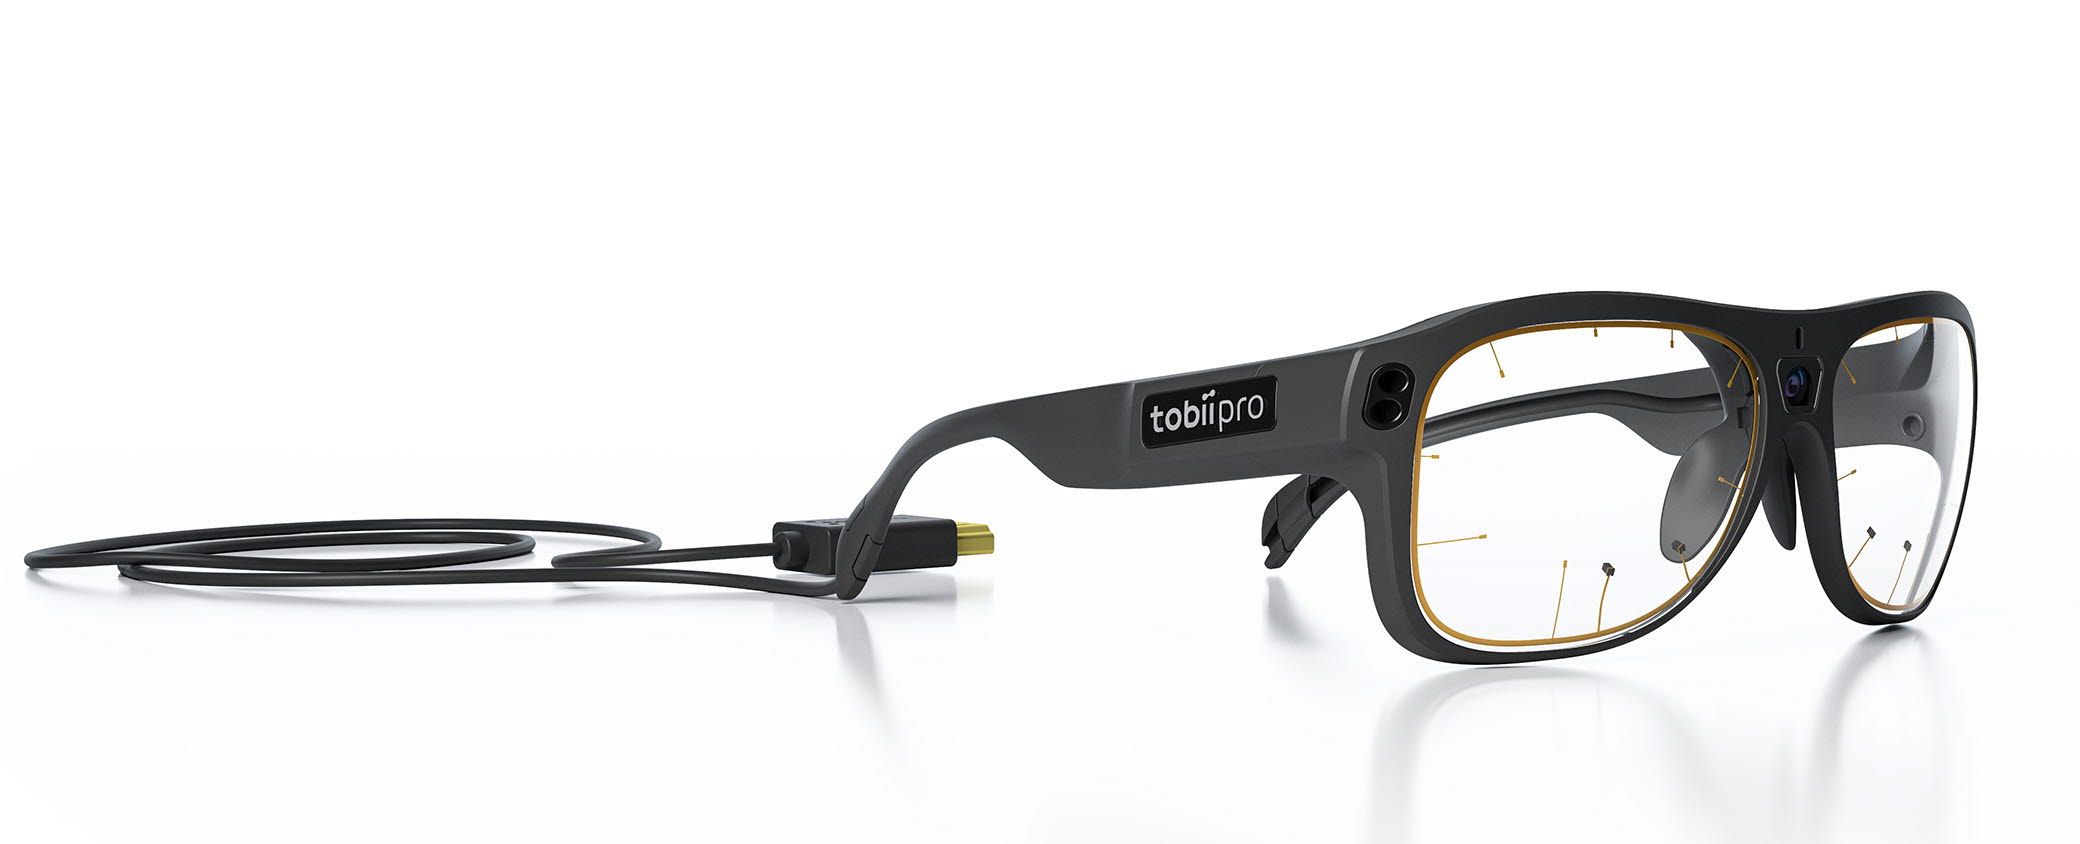 Tobii Pro Glasses 3 - wearable eye trackers